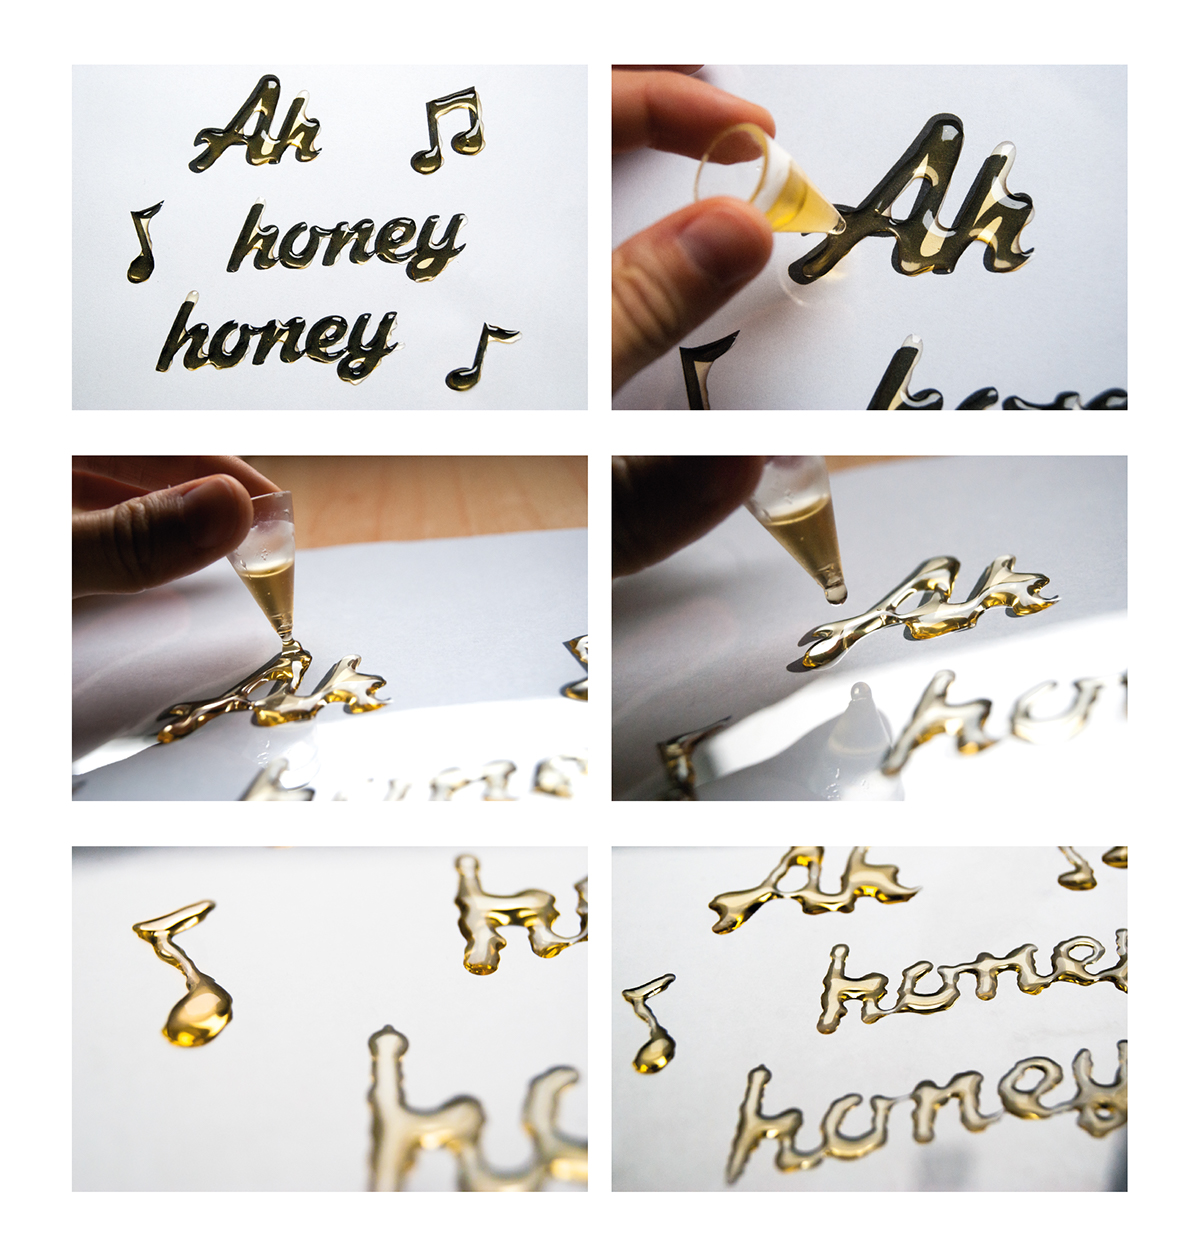 #honey #mel #typograhpy #Tipografia #creativitat #creativity #disseny #Design graphicdesign #song #handmade #type